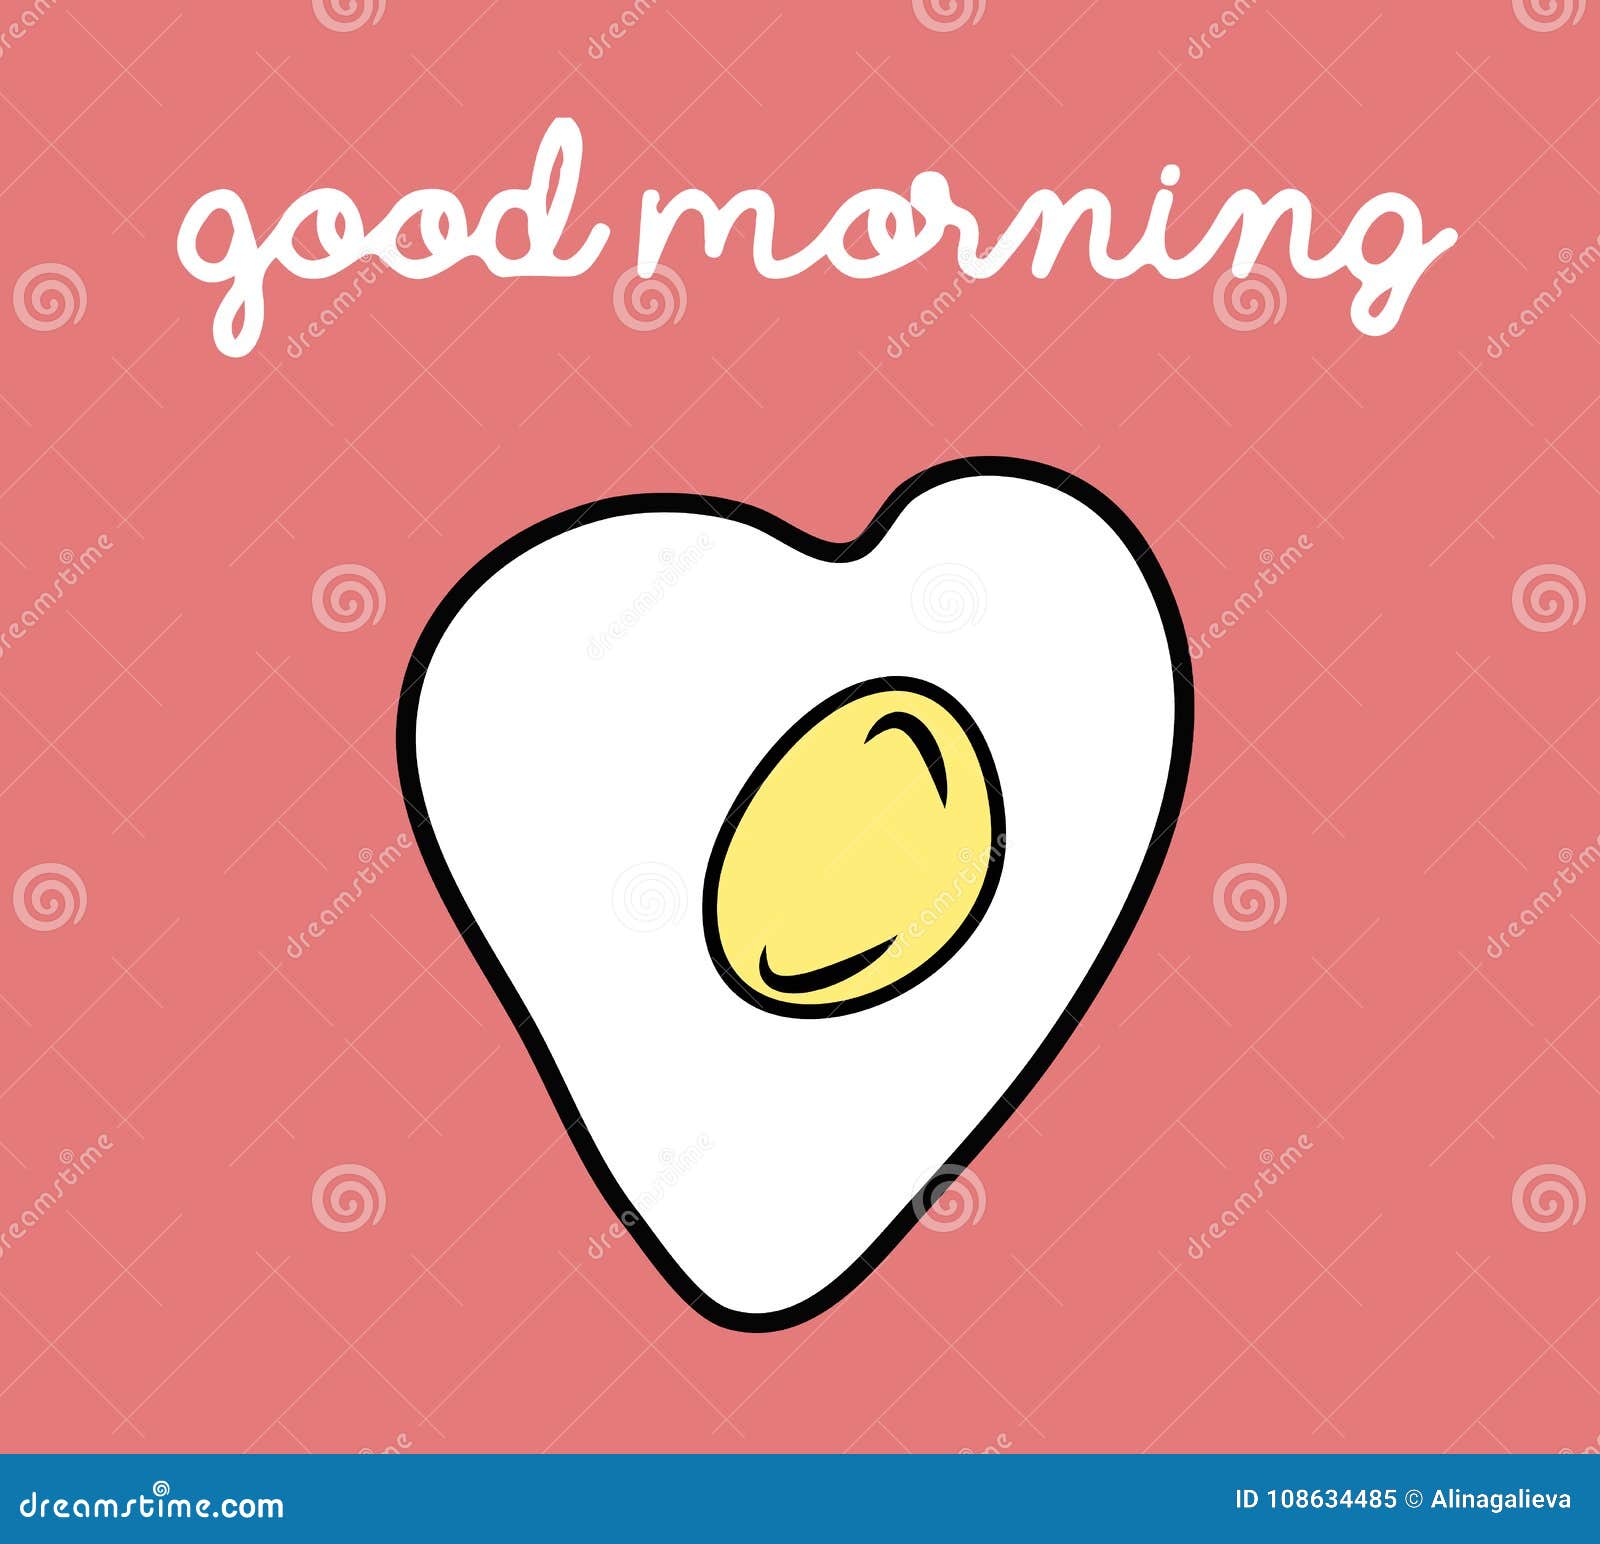 Good Morning Postcard with Scrambler Egg Heart Shape Stock Vector ...